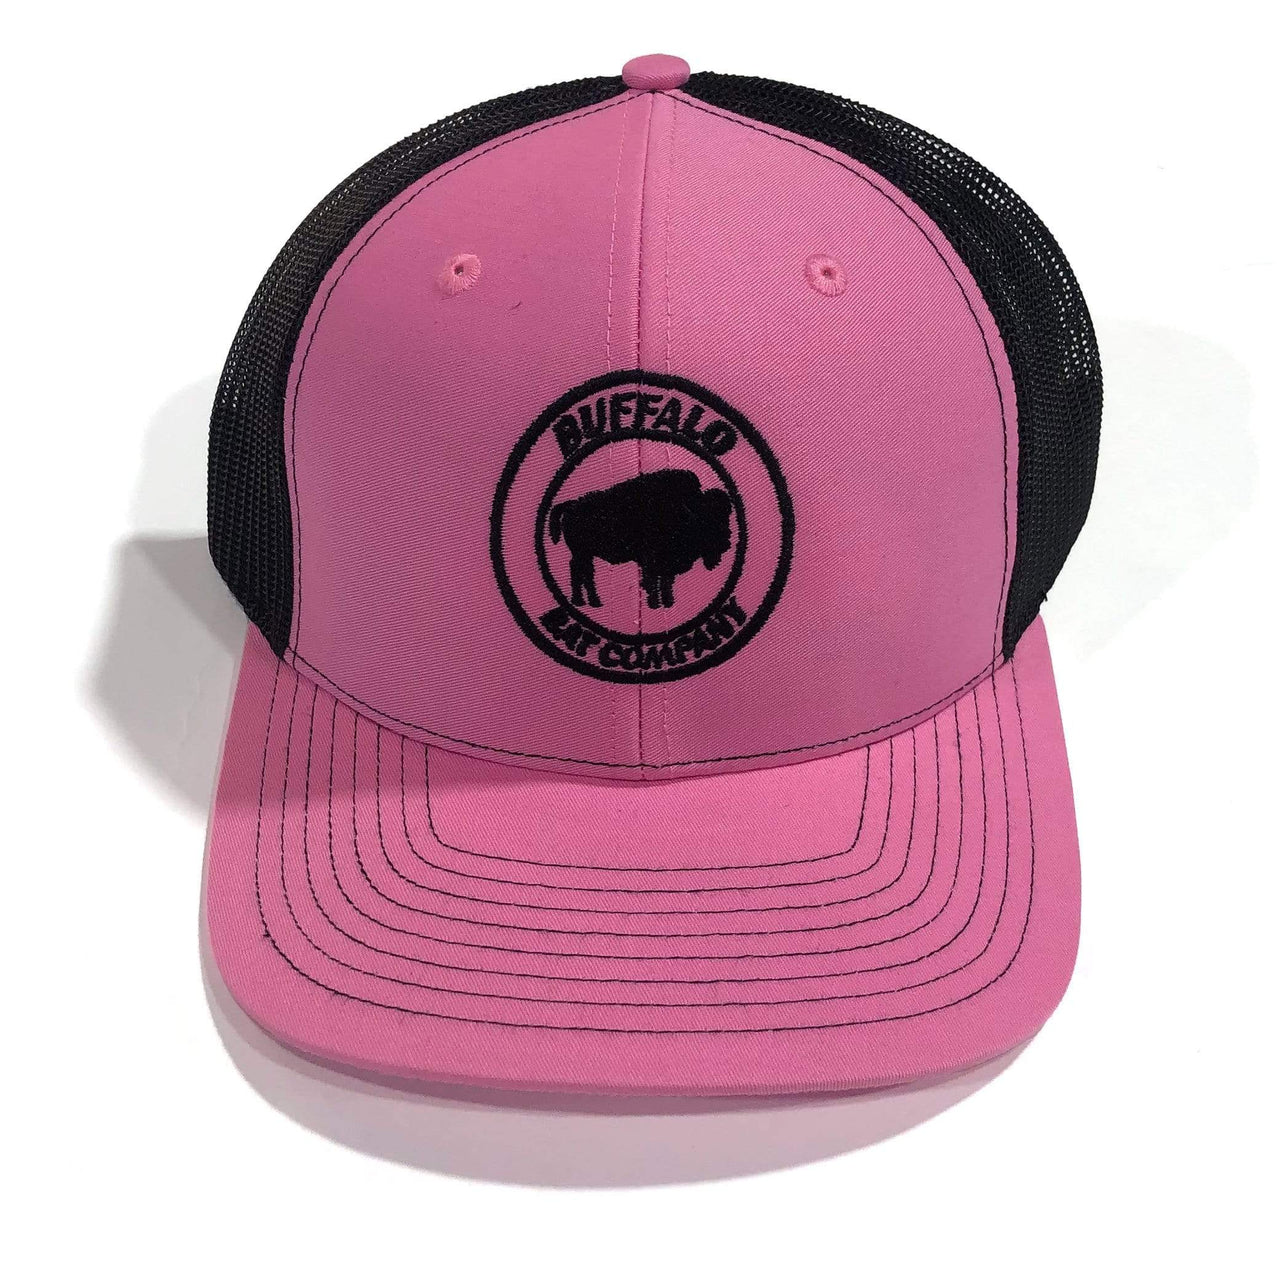 Buffalo Bat Co Apparel Pink | Black Buffalo Bat Co. Trucker Hat